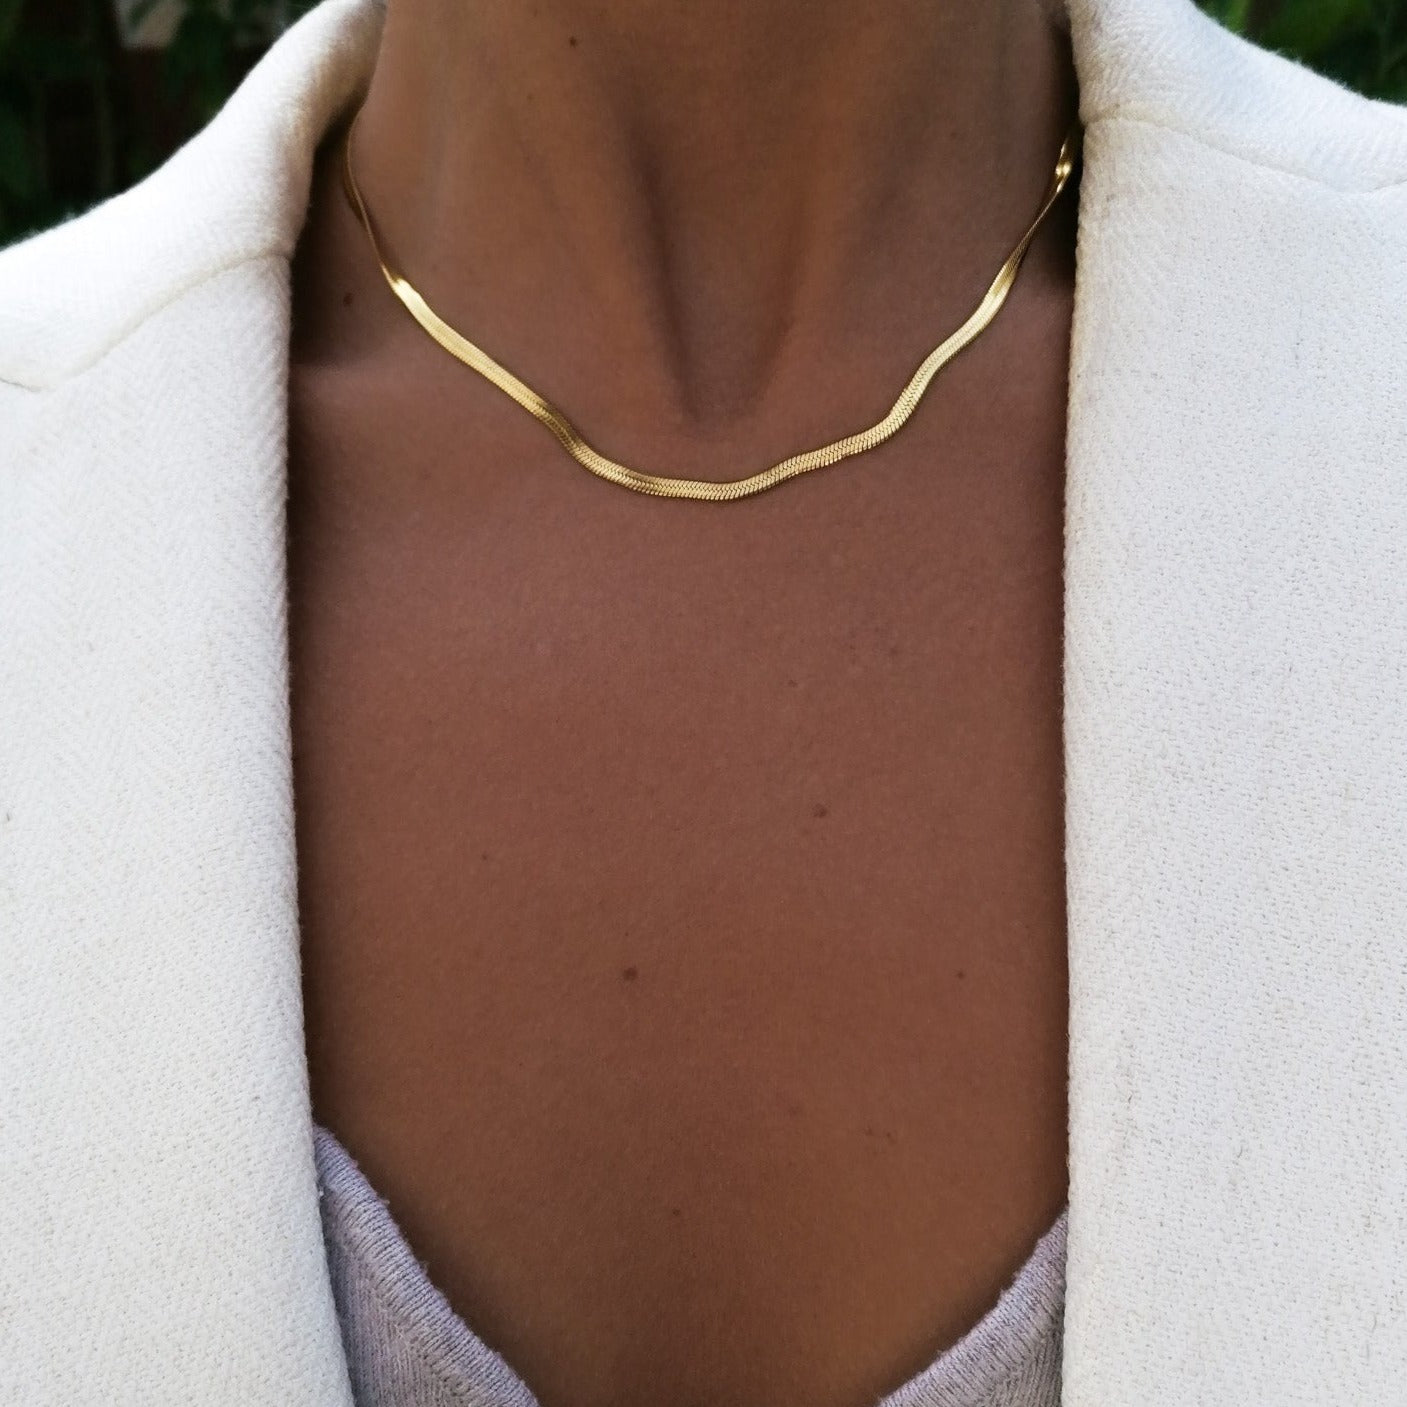 Nera necklace - 3 mm